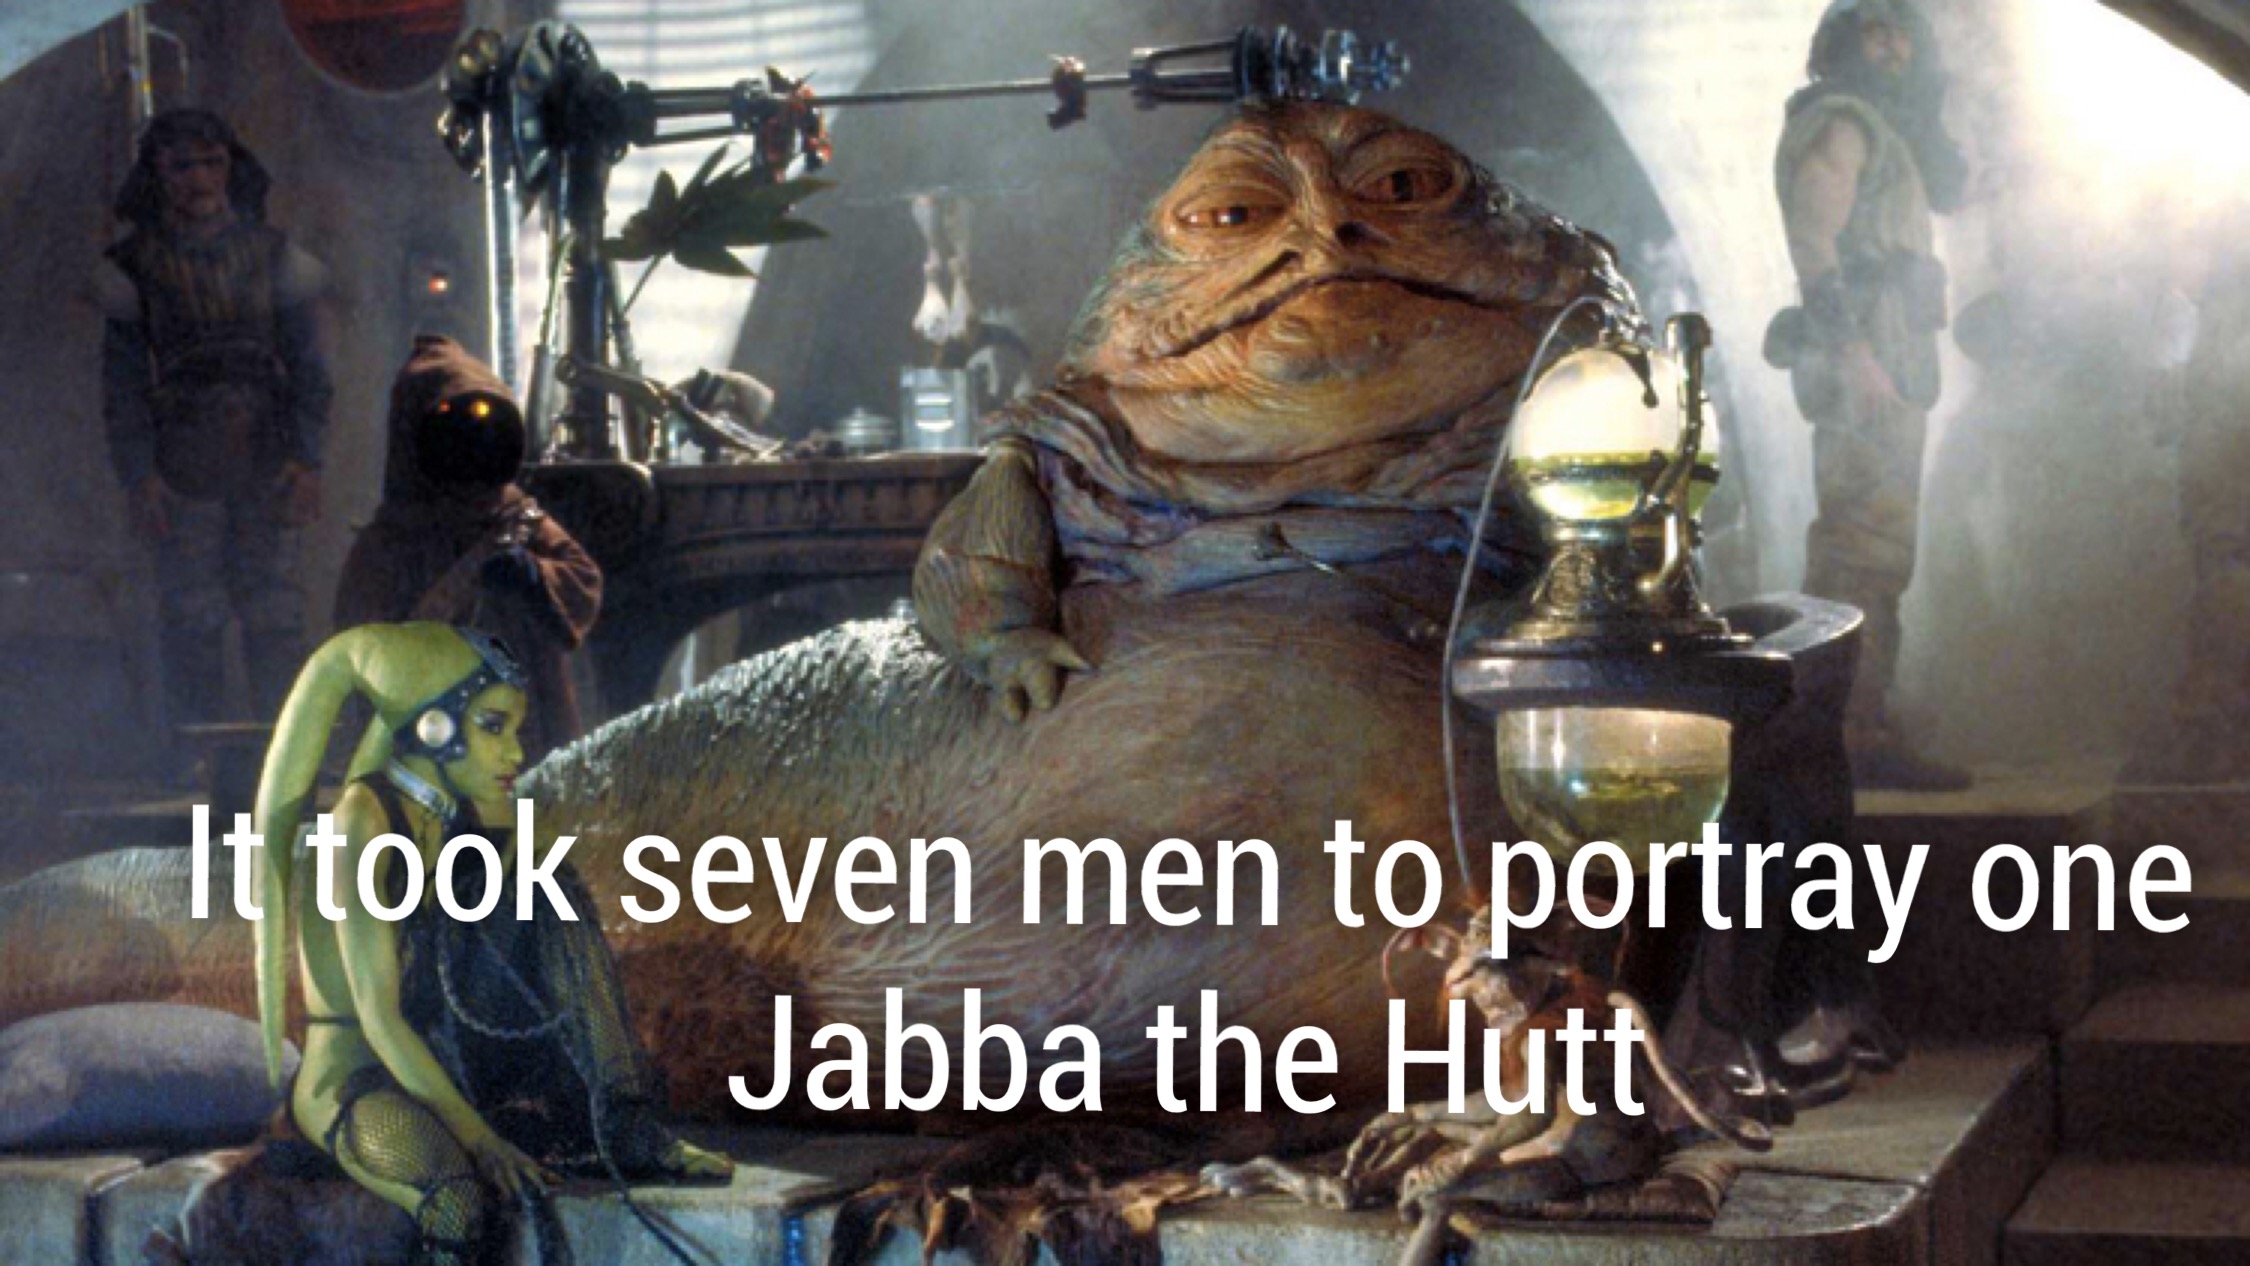 cinnamon roll et - It took seven men to portray one Jabba the Hutt